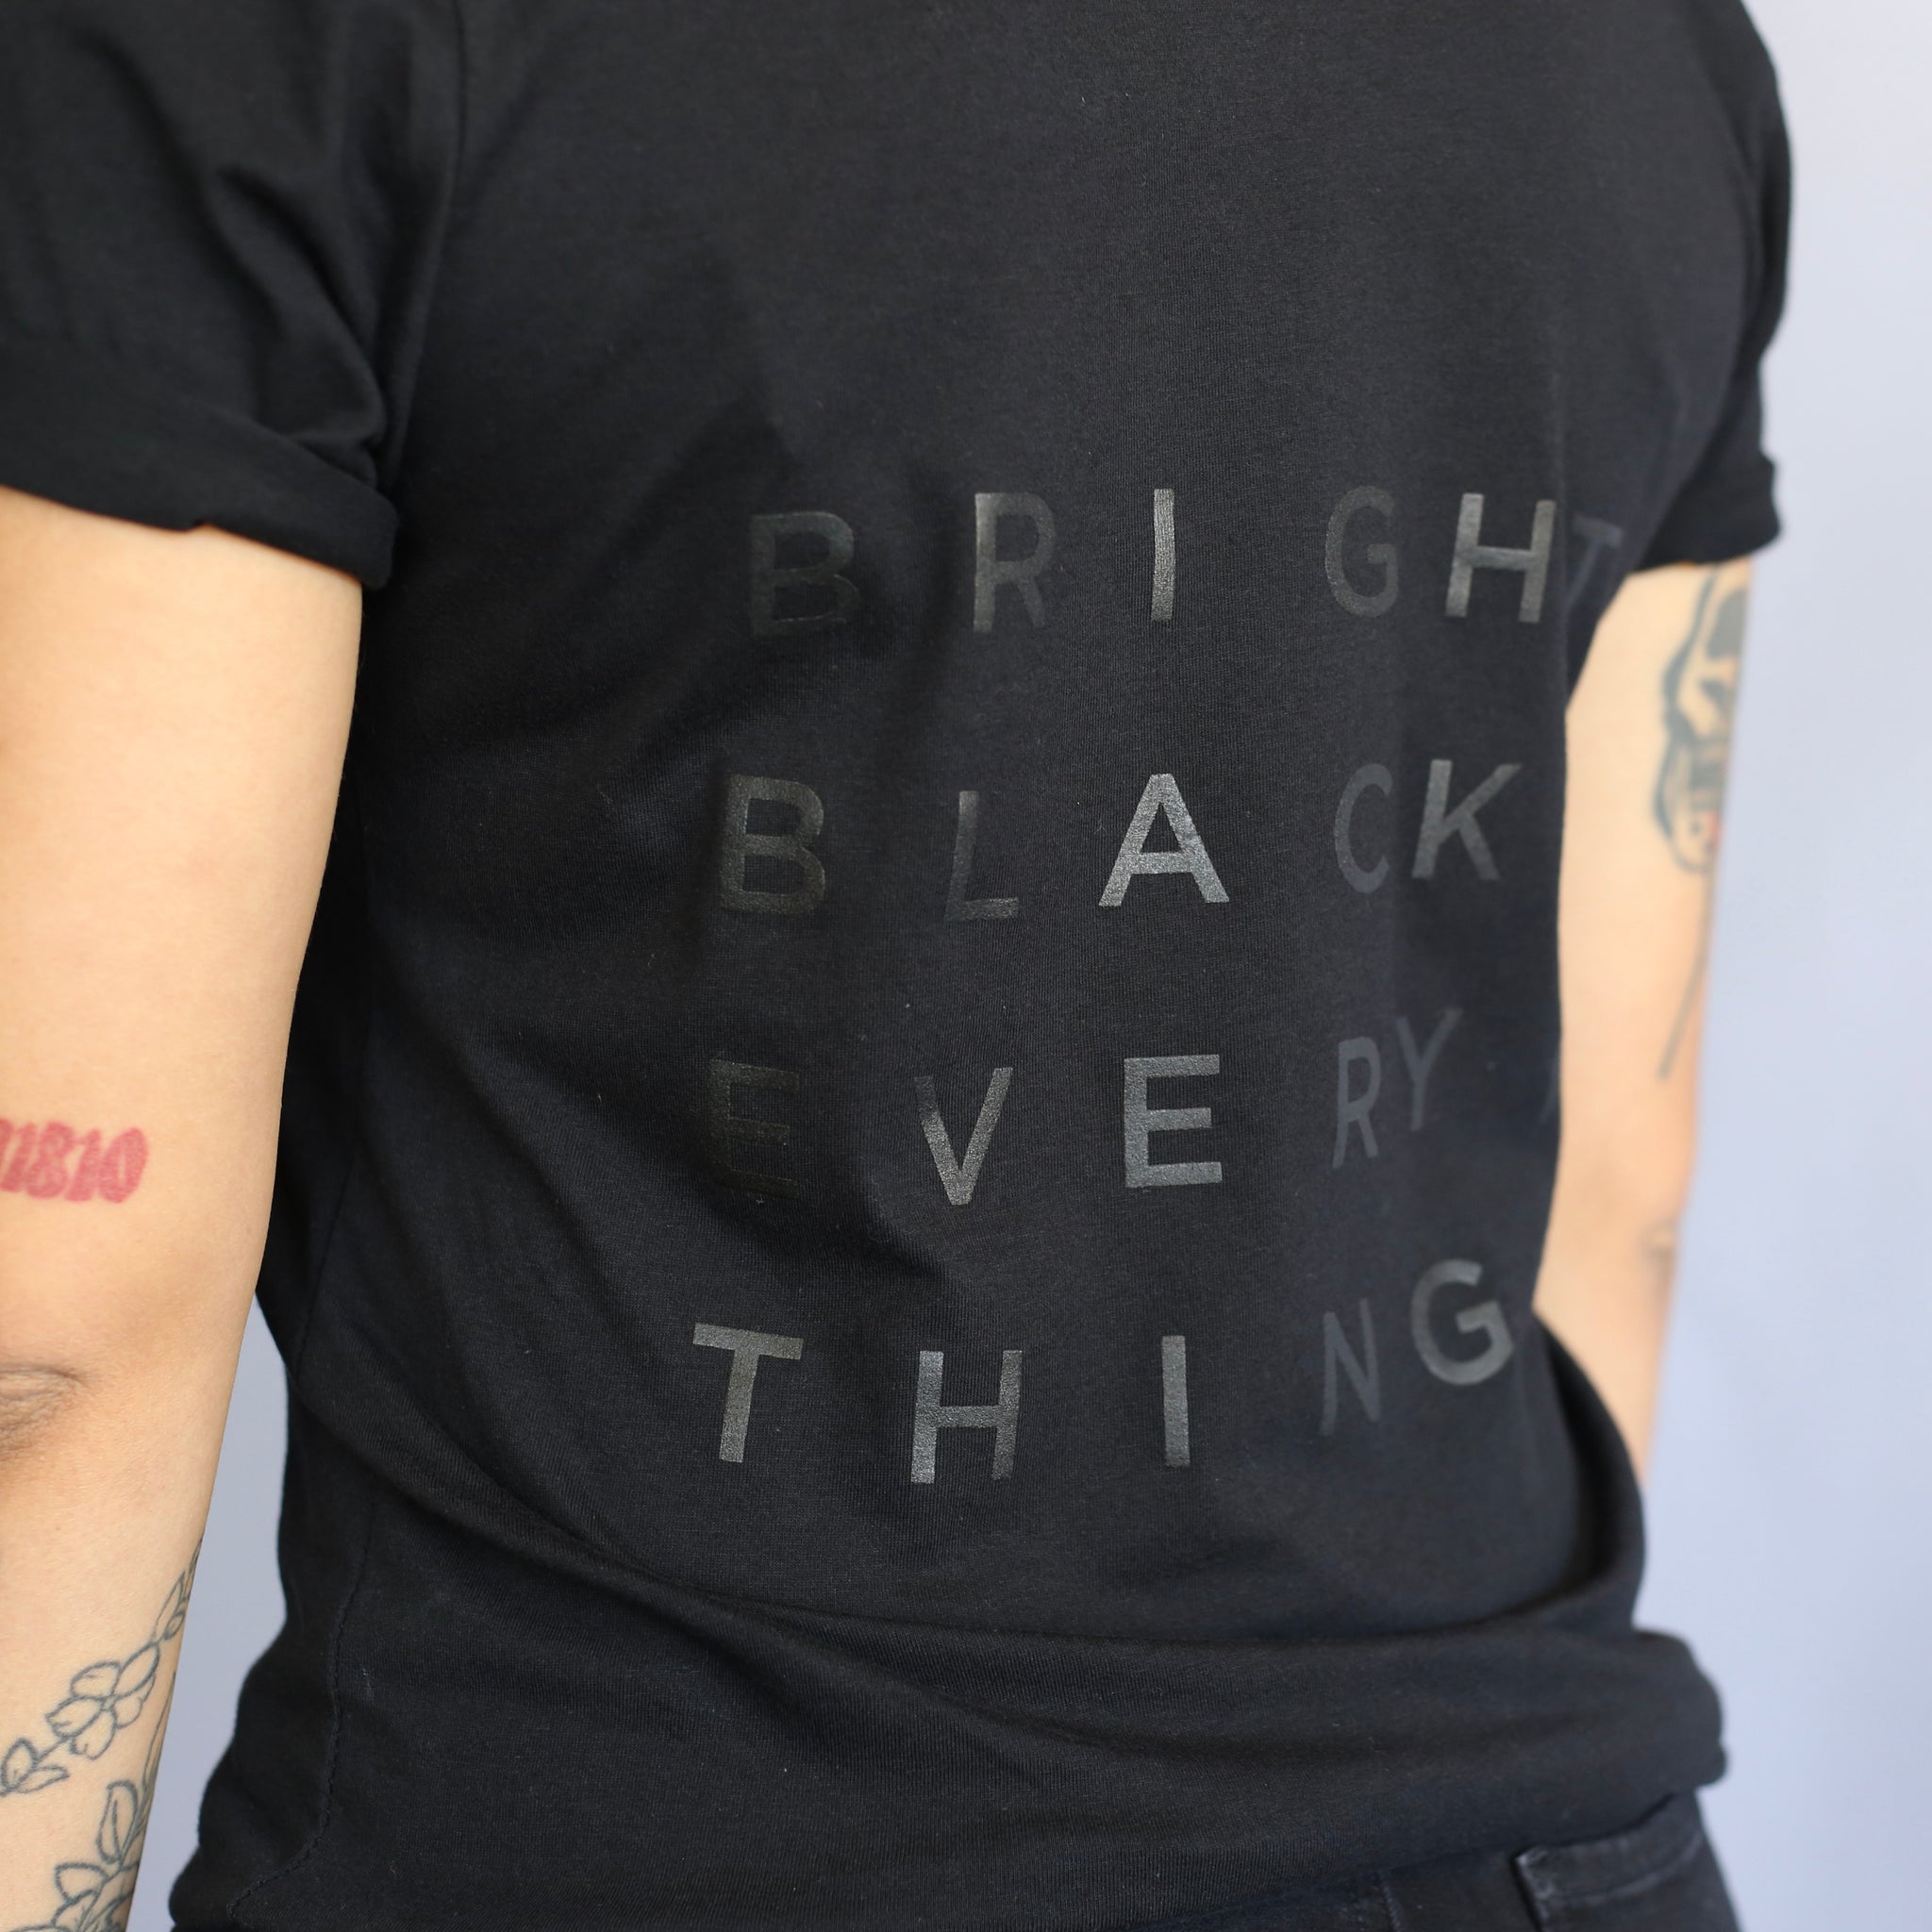 Bright Black Everything T-Shirt (Black)